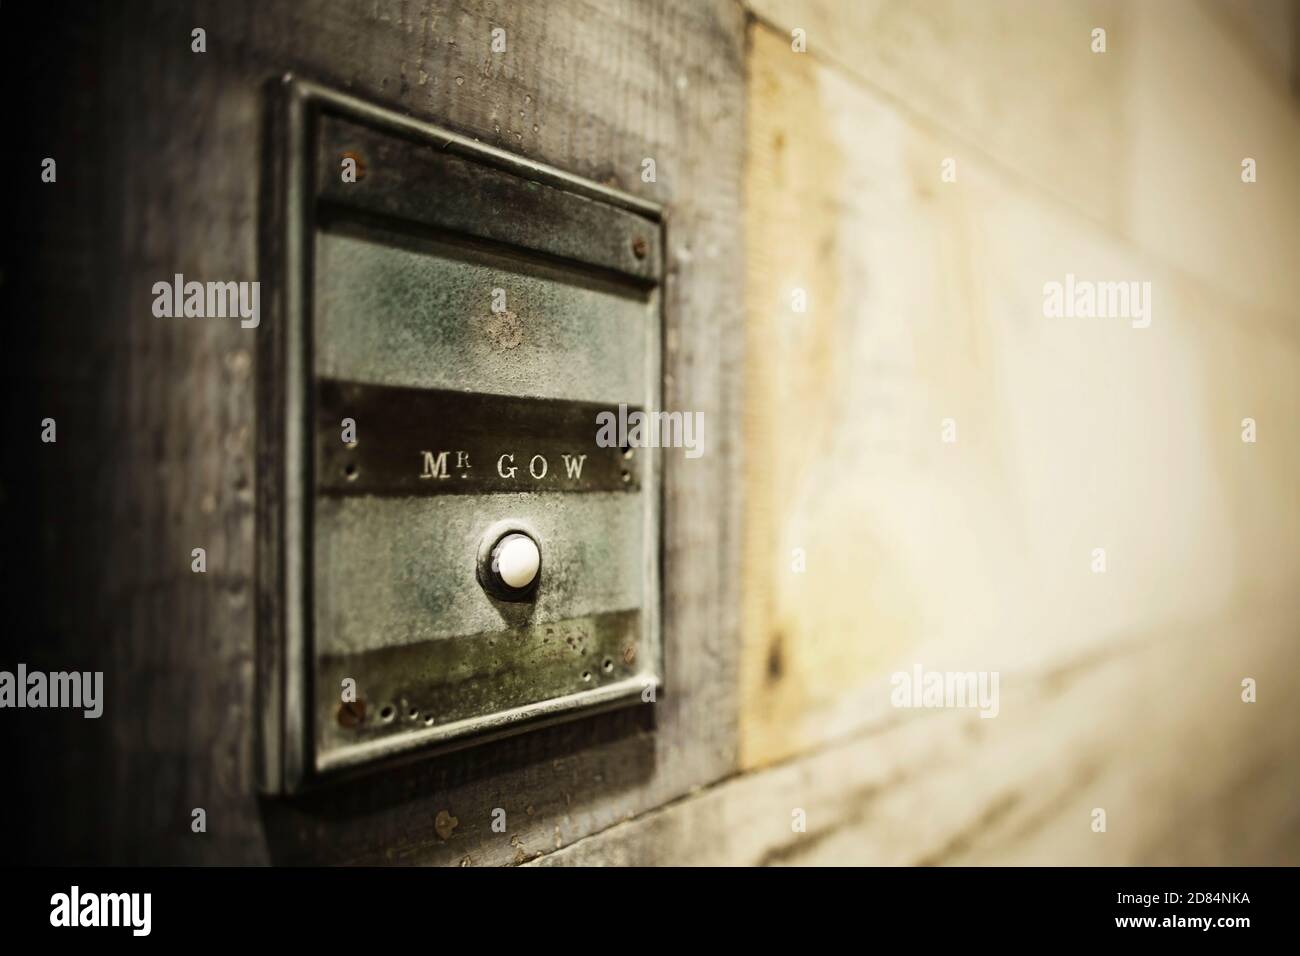 Old doorbell for Mr Gow, Parliament Square, Edinburgh, Scotland. Stock Photo